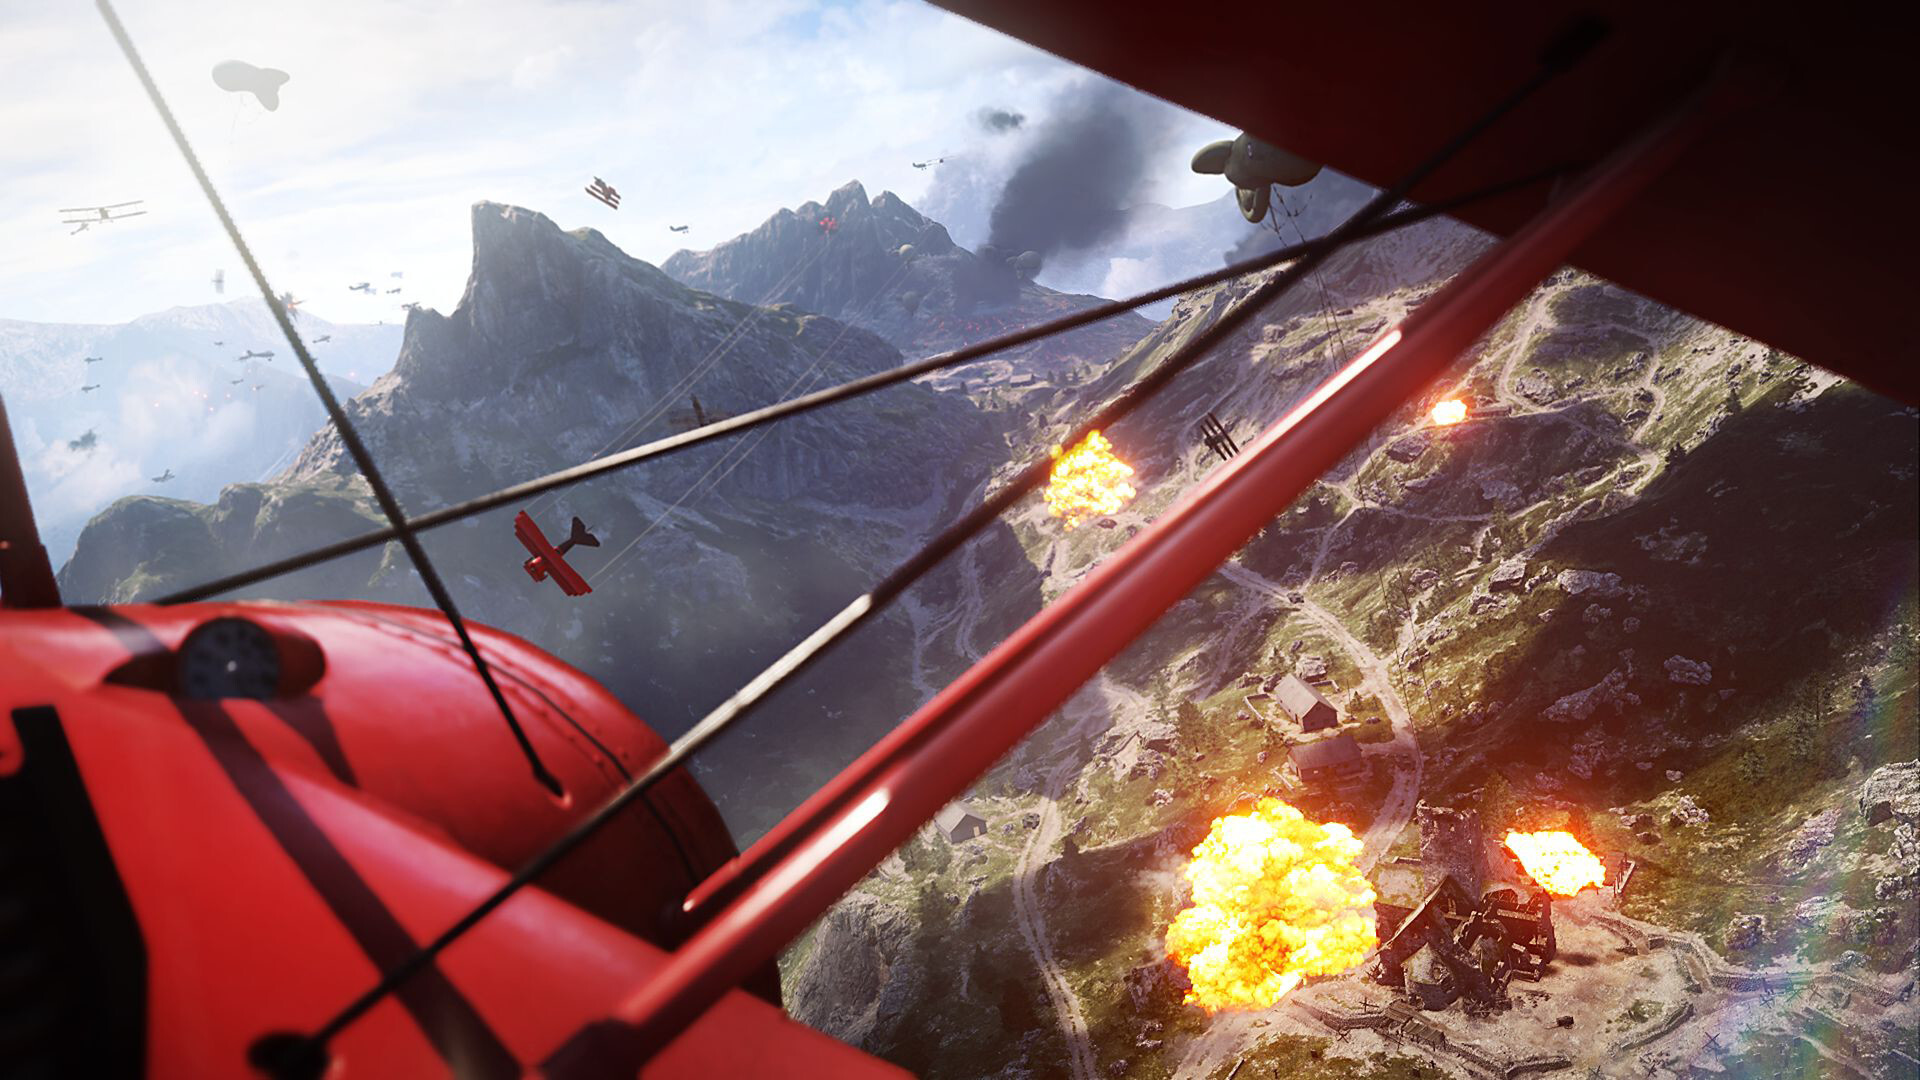 Buy Battlefield 1 - Hellfighter Pack EA App